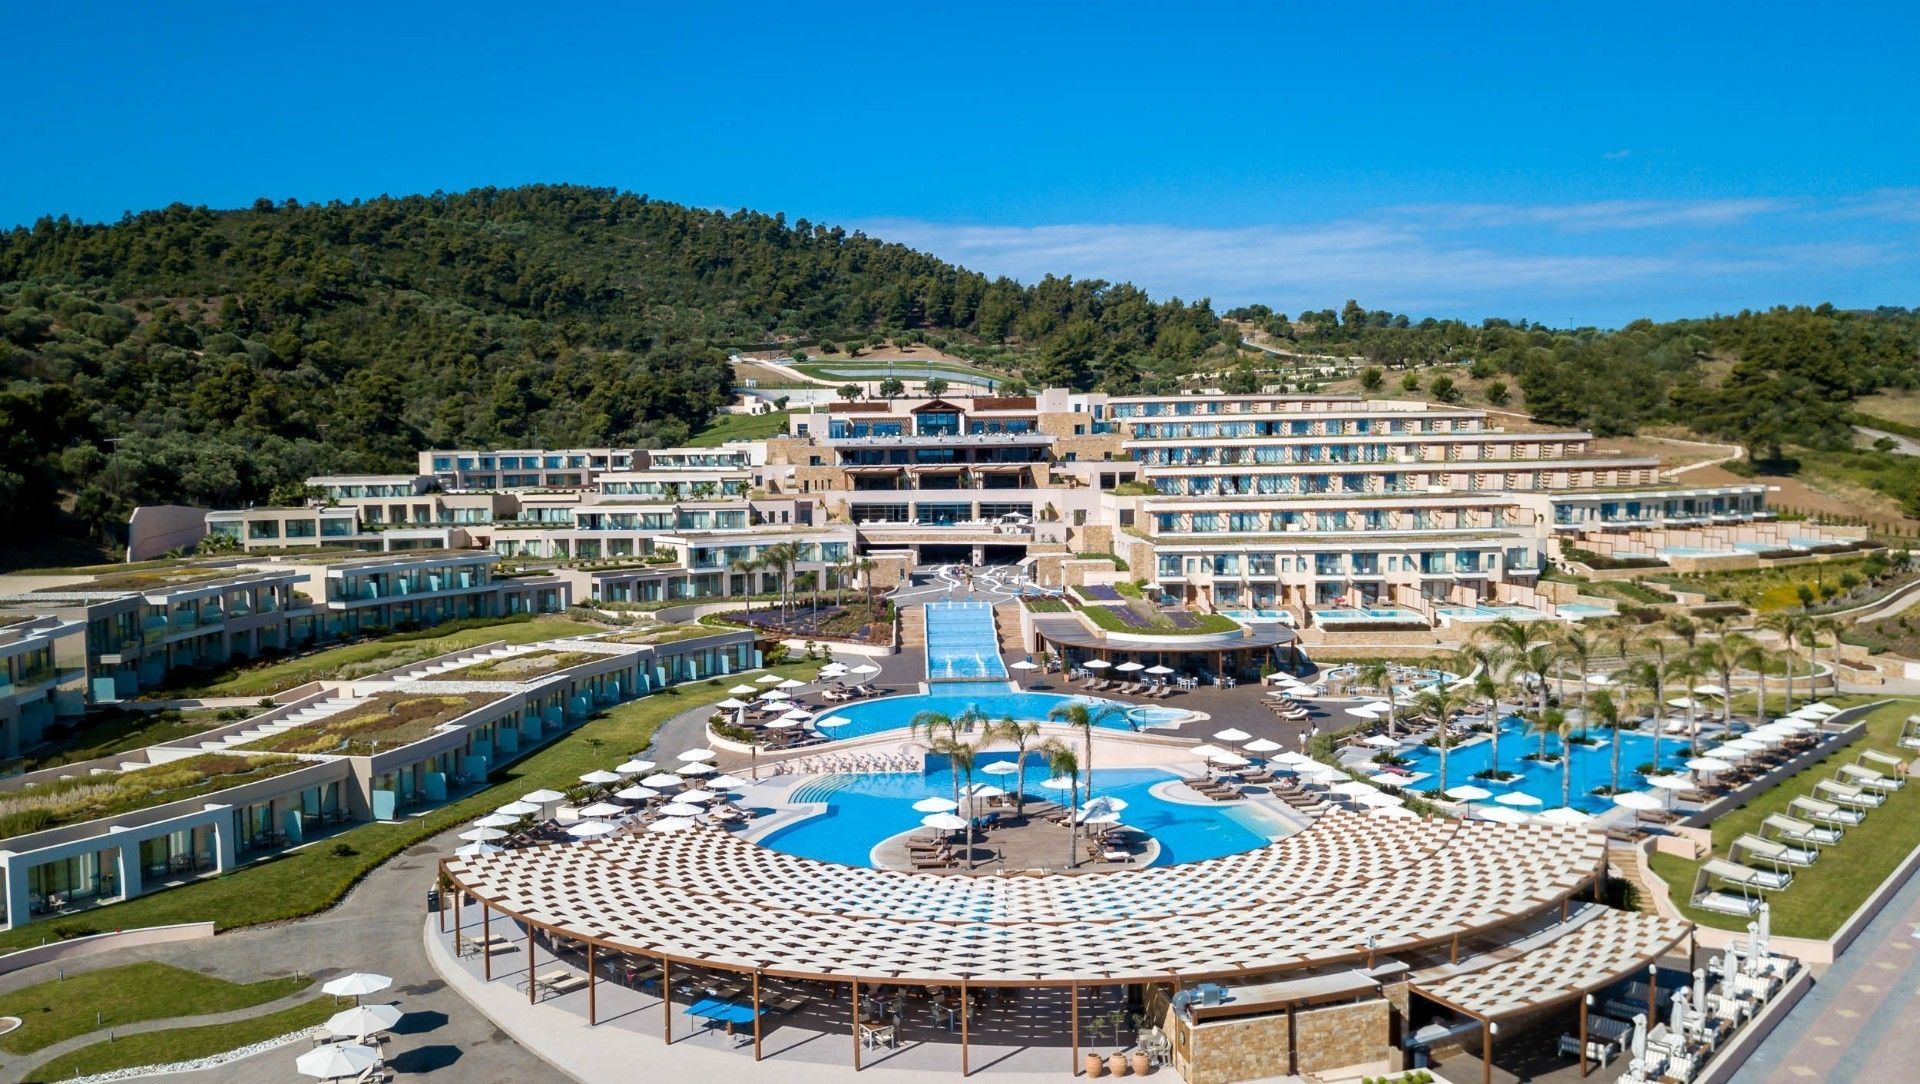 Miraggio Thermal Spa & Resort-Hotel spolja.jpeg